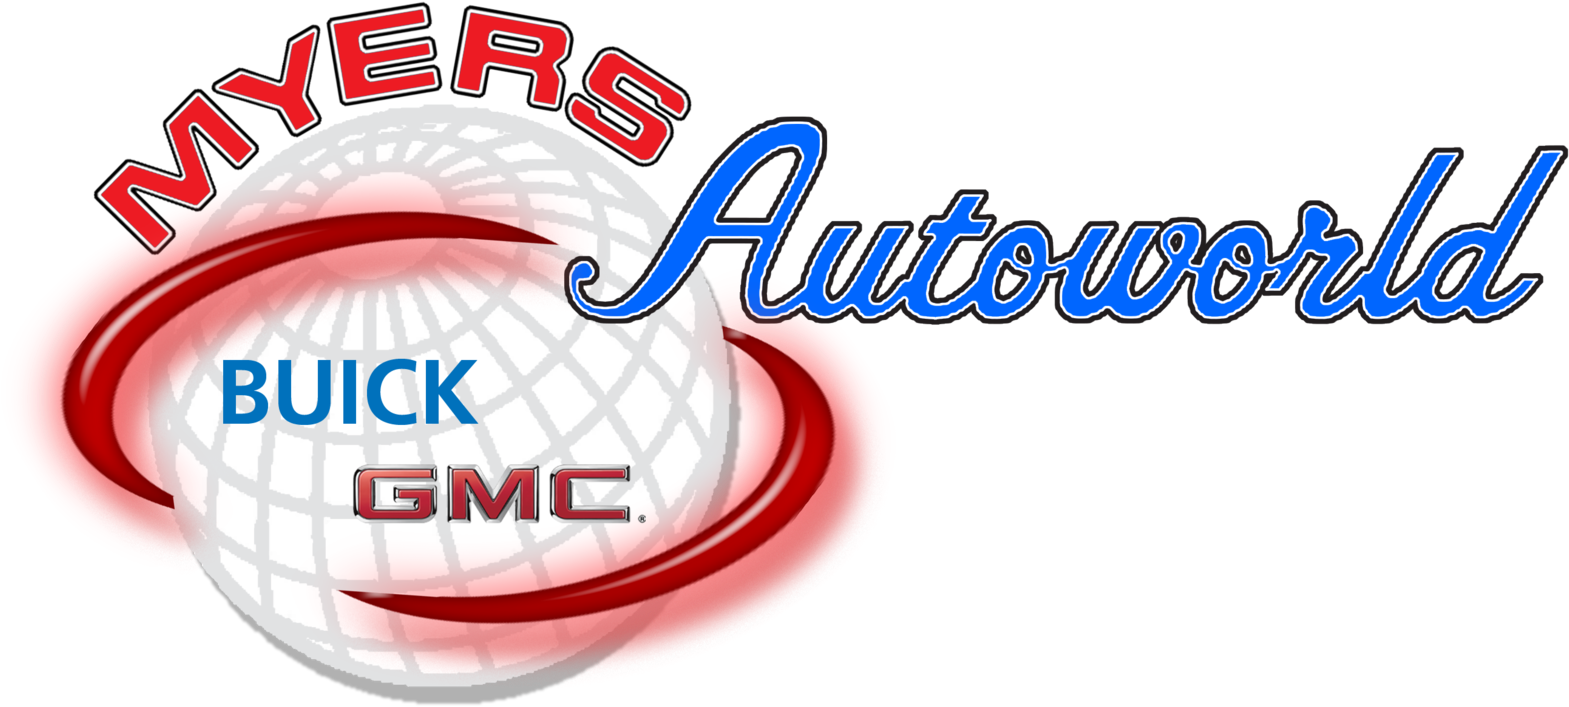 Myers Autoworld Buick Gmc - Myers Autoworld (1600x789)